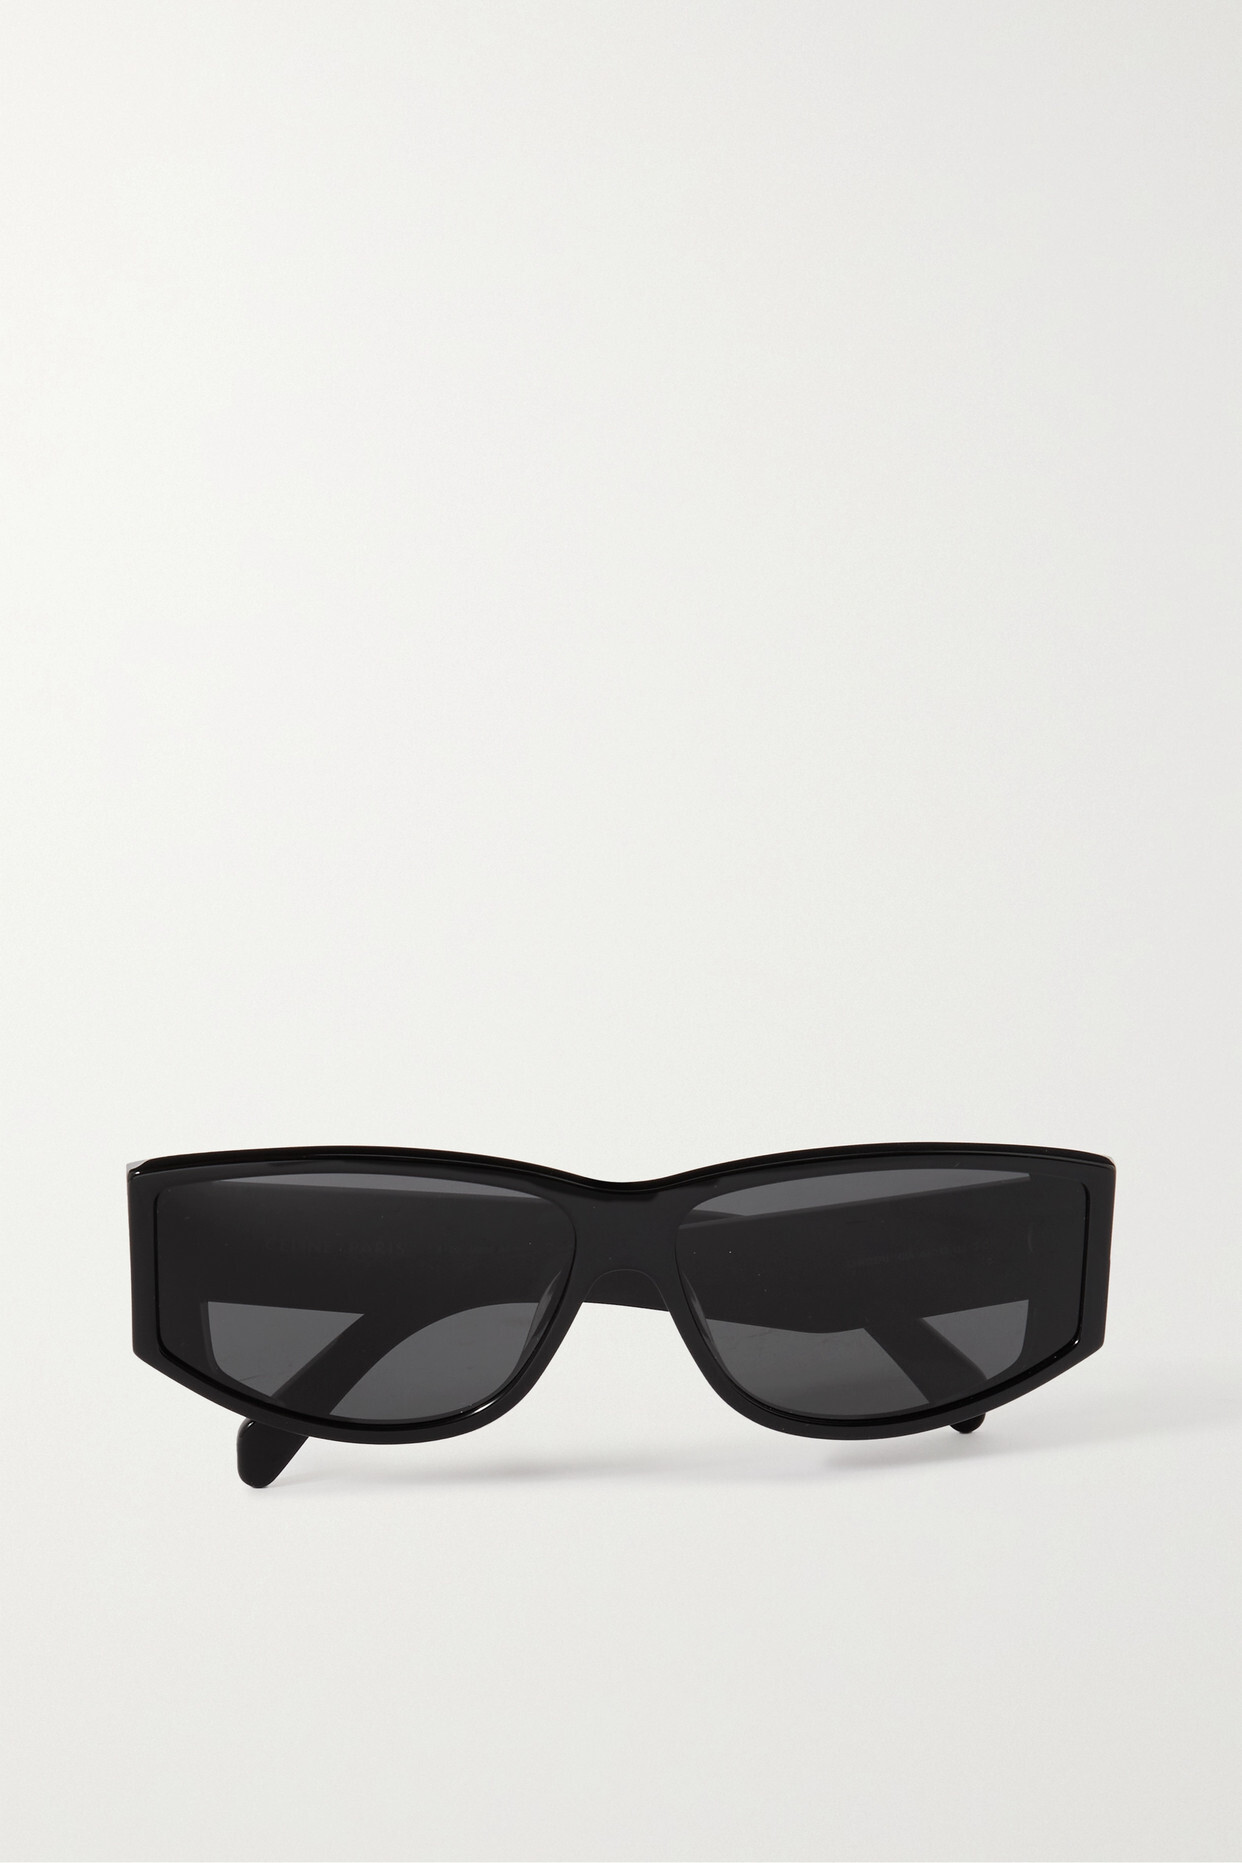 CELINE Eyewear - D-frame Acetate And Gold-tone Sunglasses - Black